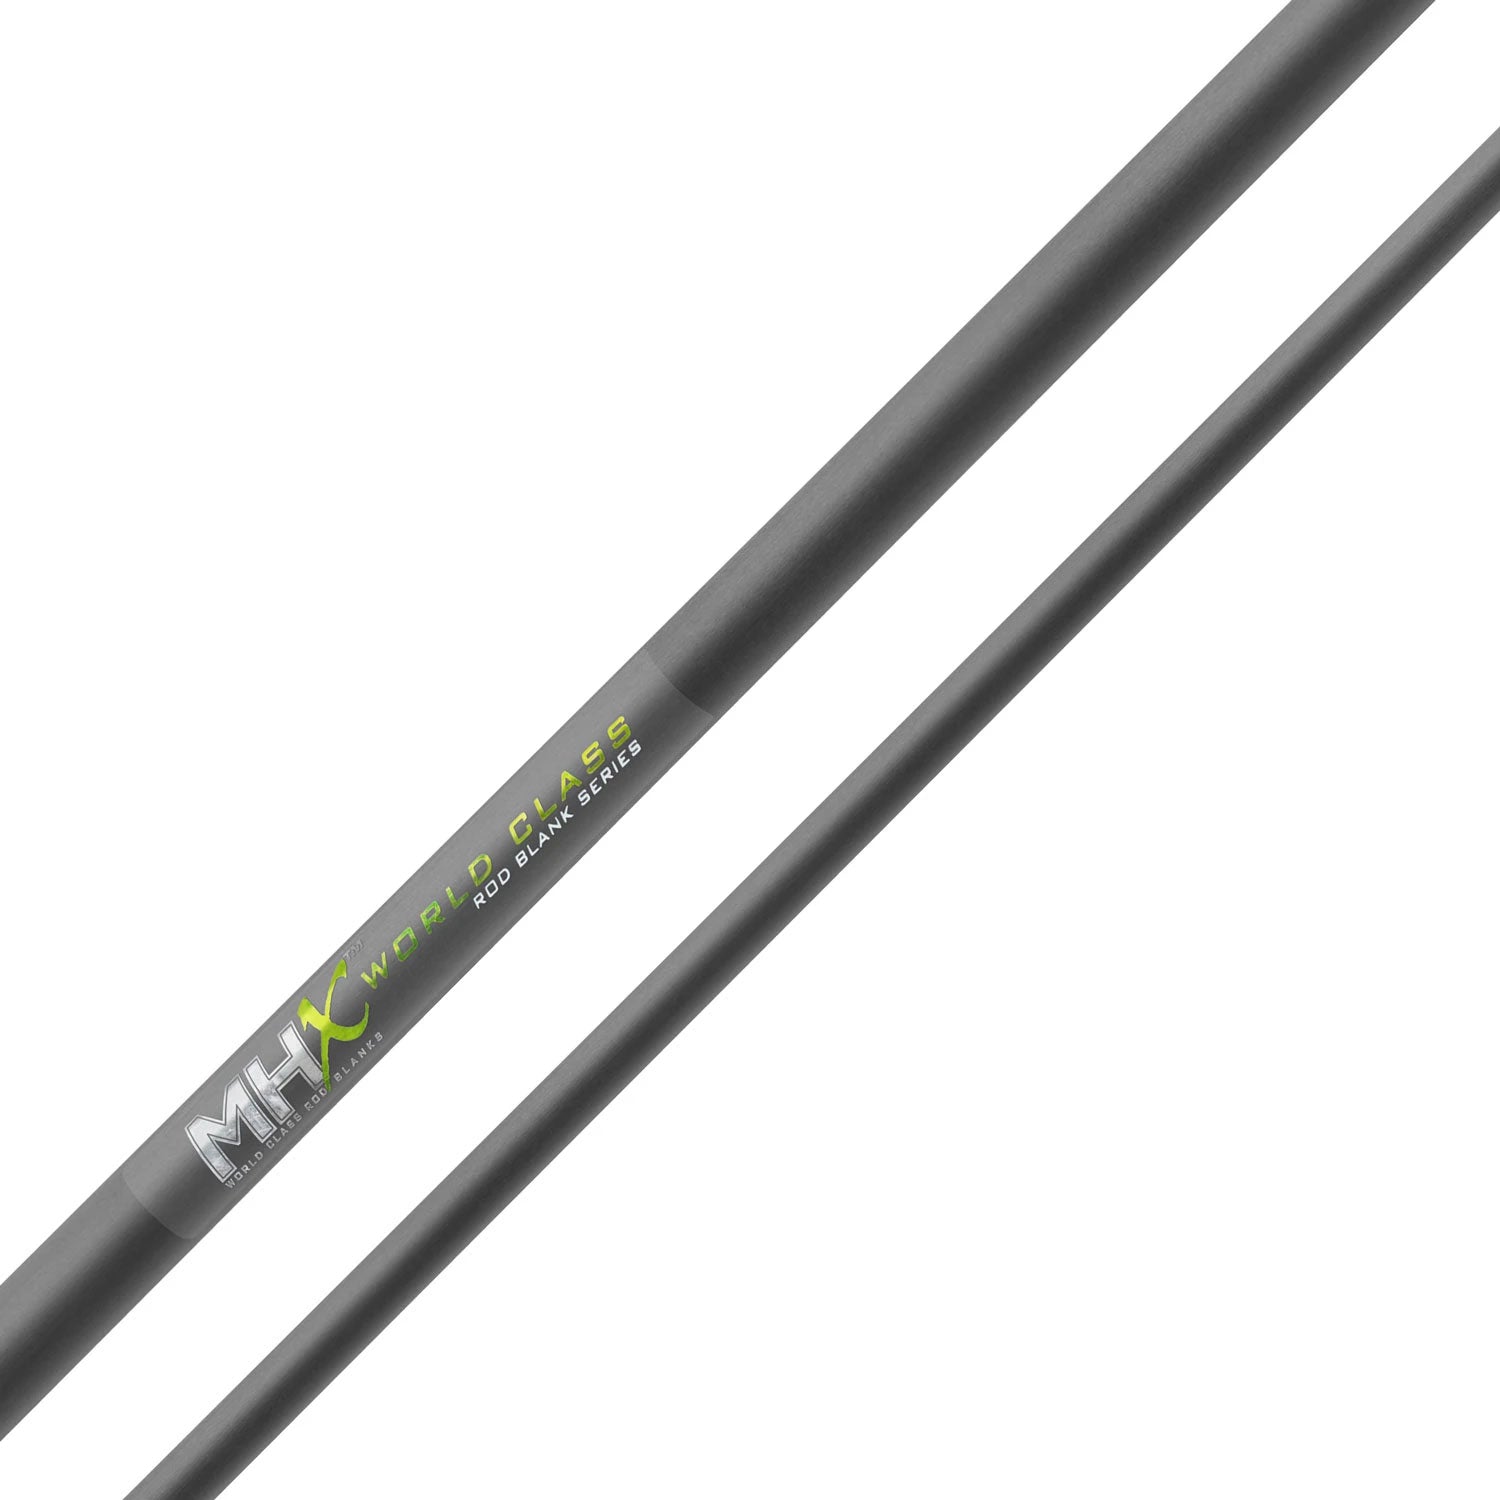 MHX 7'6" Med-Light Spin Jig Rod Blank - SJ9000-2-MHX